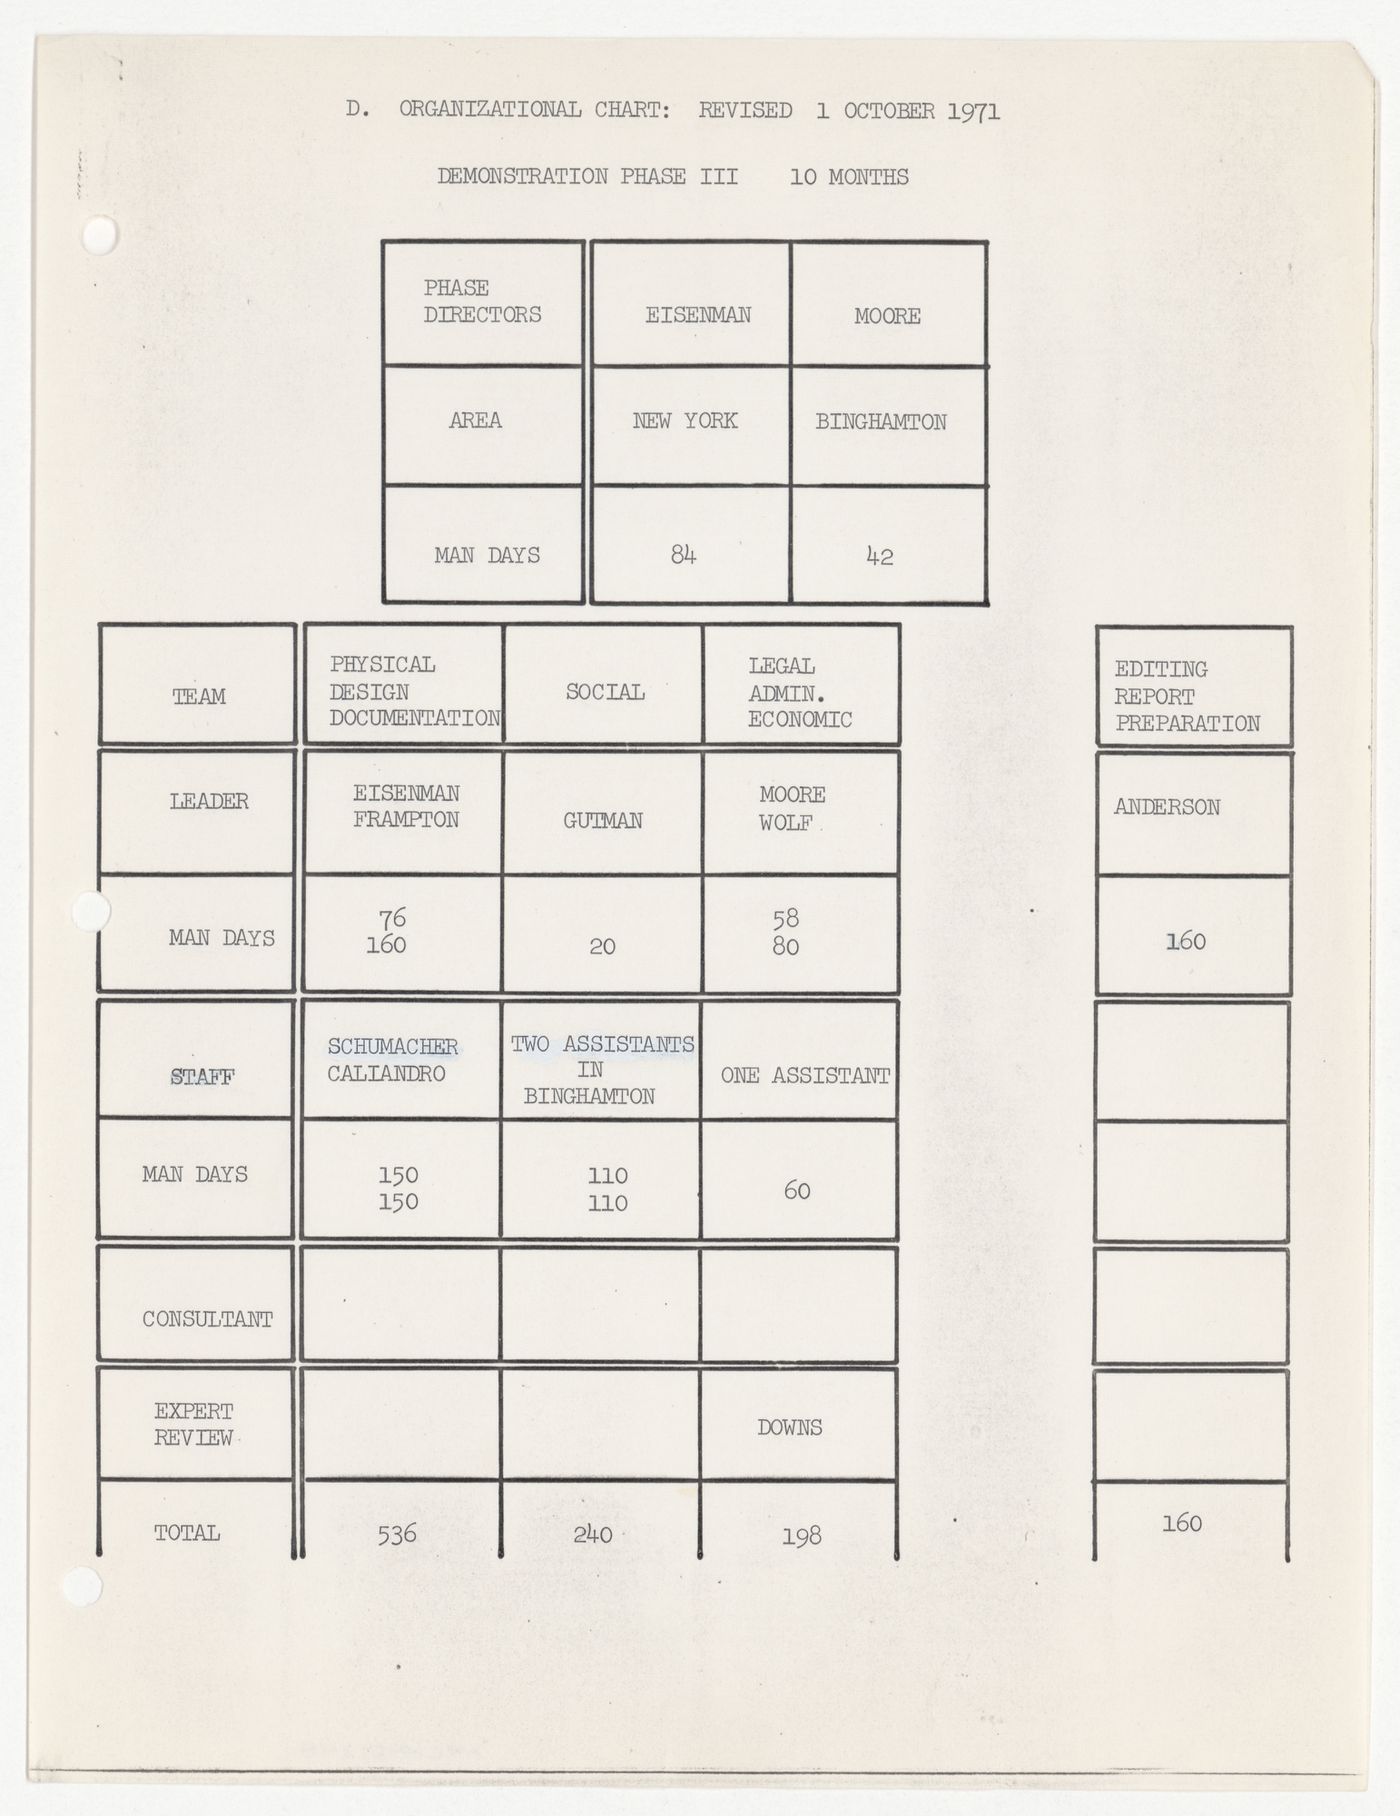 Organizational chart for demonstration phase III, Binghamton Street Study